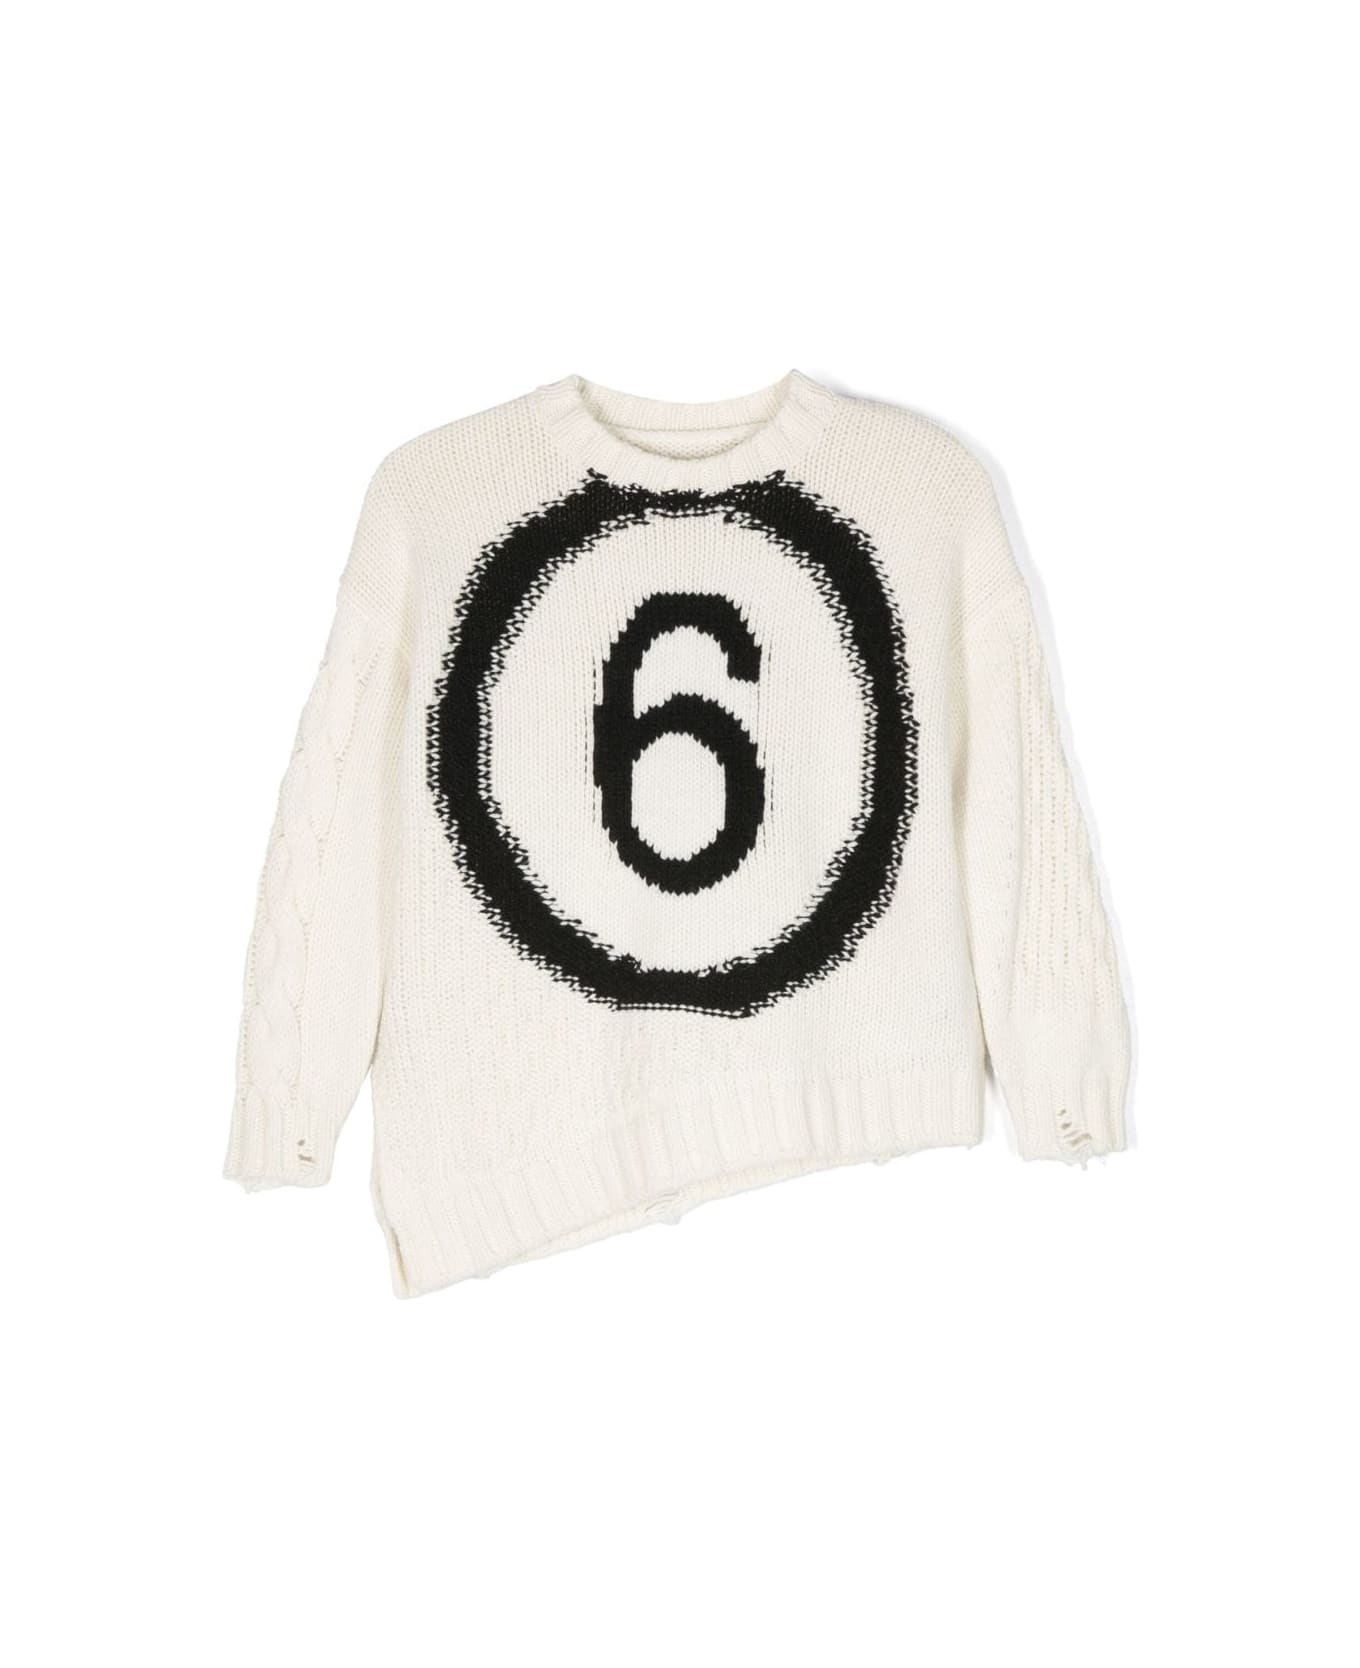 MM6 Maison Margiela Intarsia Sweater - White